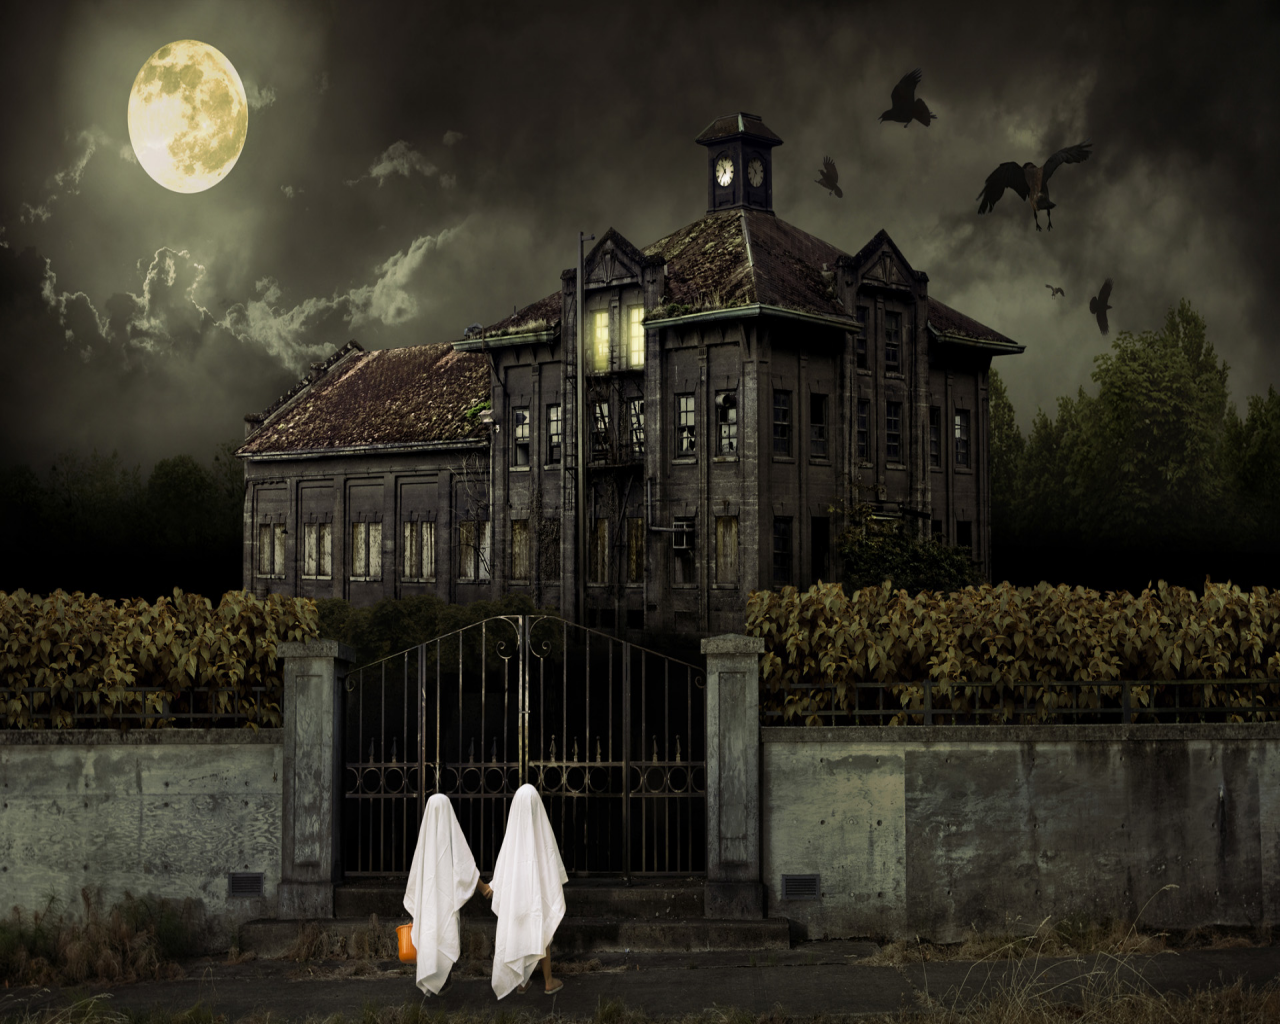 Wallpaper Holidays Halloween Scary House Desktop